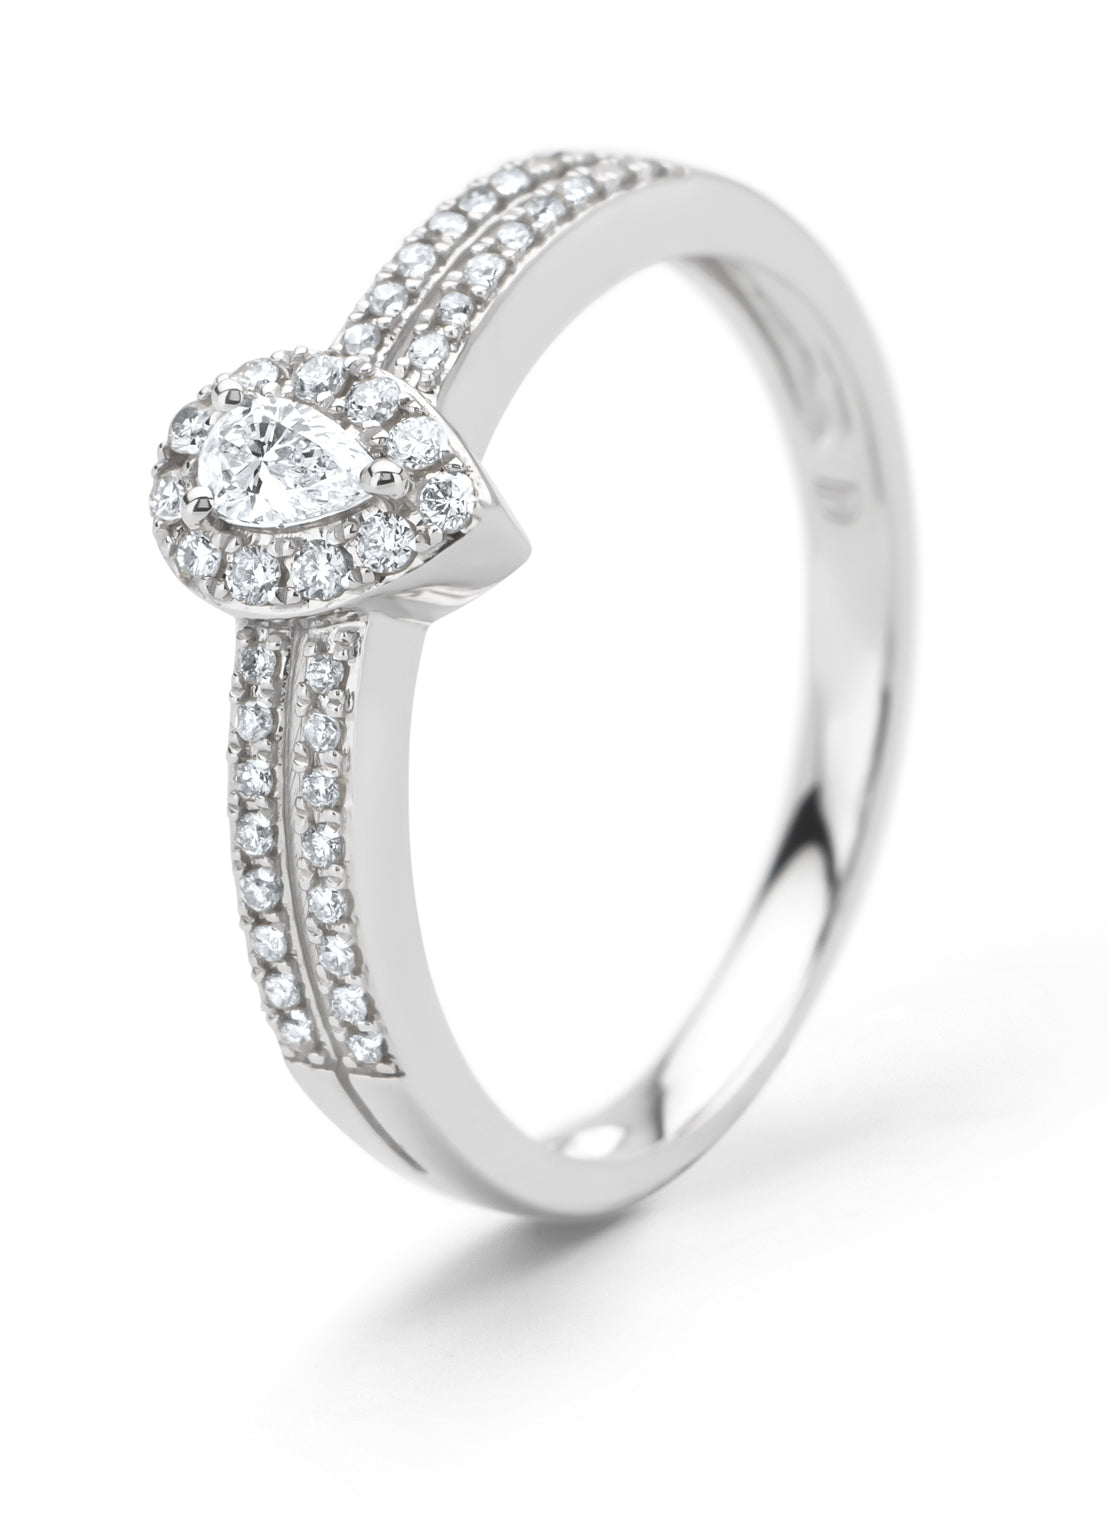 White gold ring, 0.25 ct diamond, petite romance